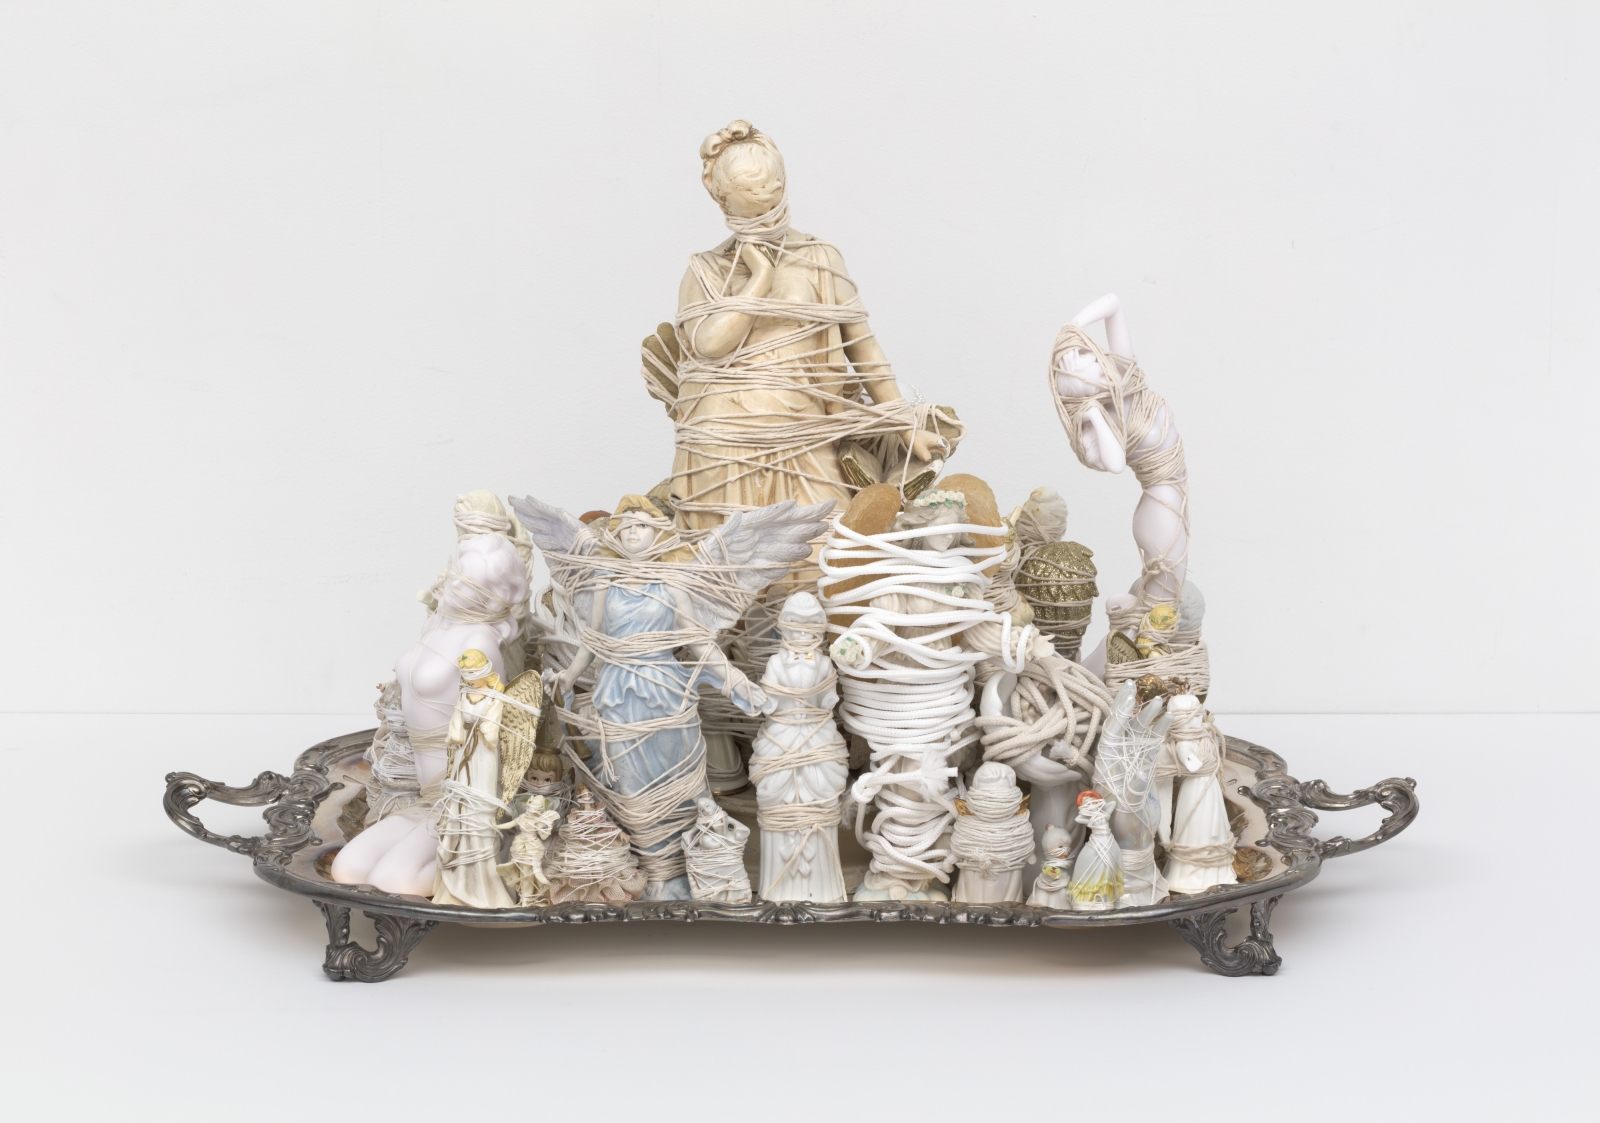 Portia Munson
Serving Tray #3, 2021
found figurines, string, rope, serving tray
13 x 26 x 16 ins.
33 x 66 x 40.6 cm